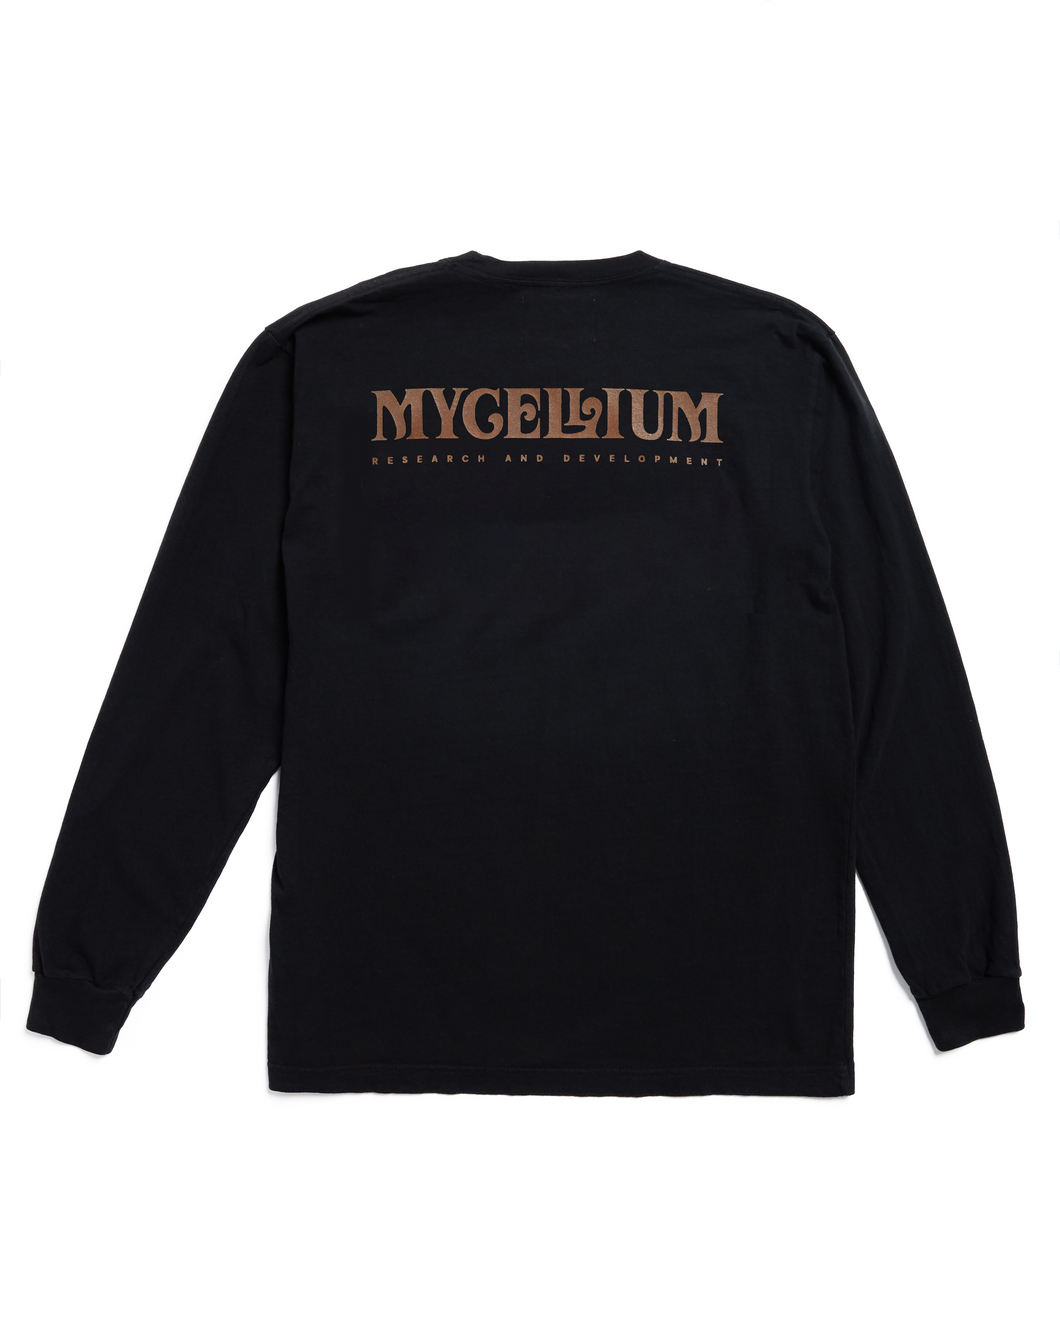 MYCELIUM Recycled Longsleeve T-Shirt